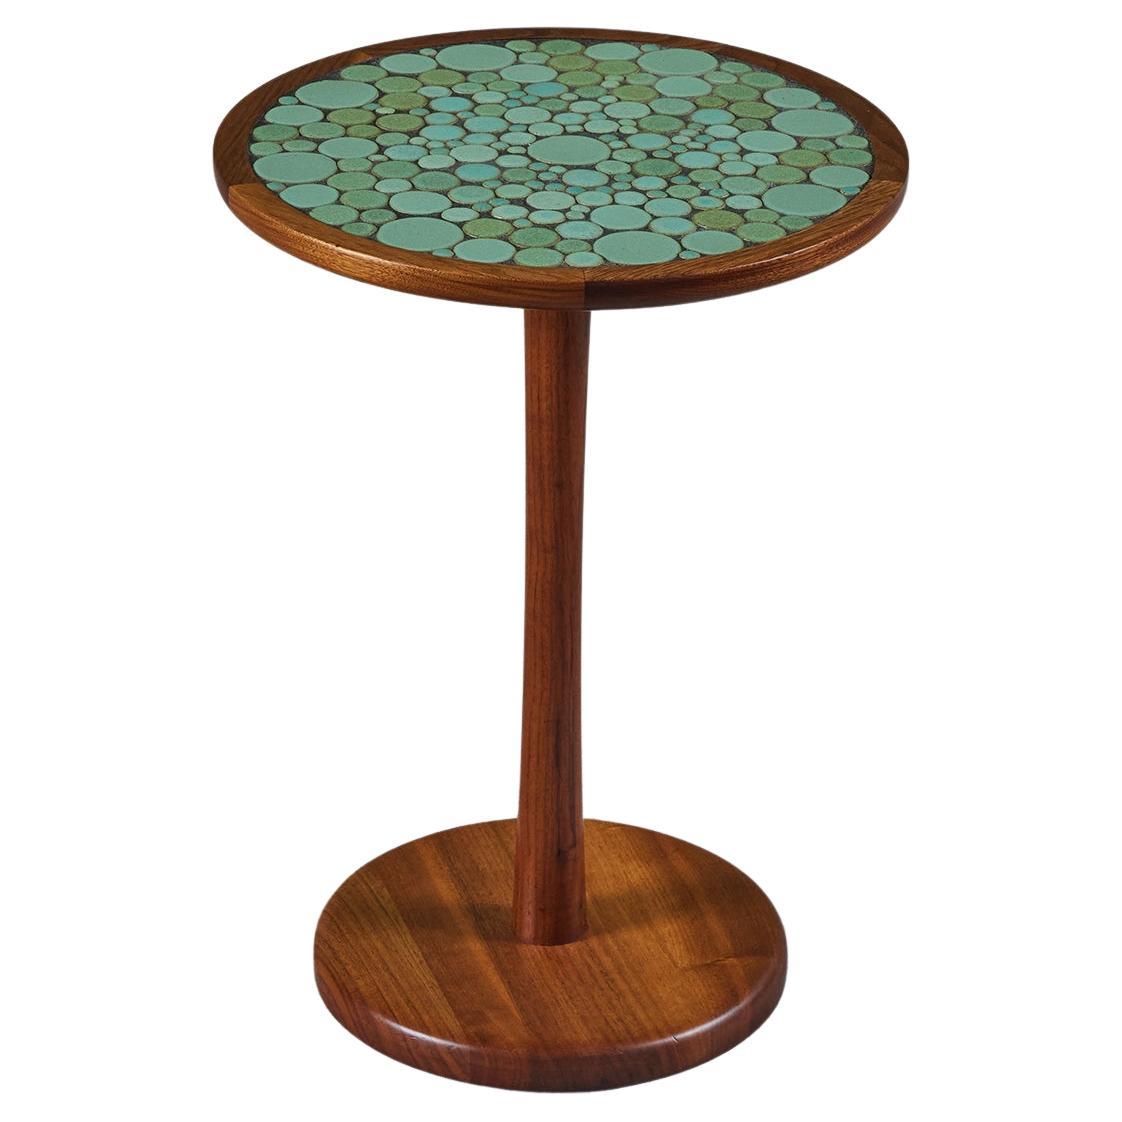 Gordon & Jane Martz Sea Foam Green Coin Tile Mosaic Side Table For Sale